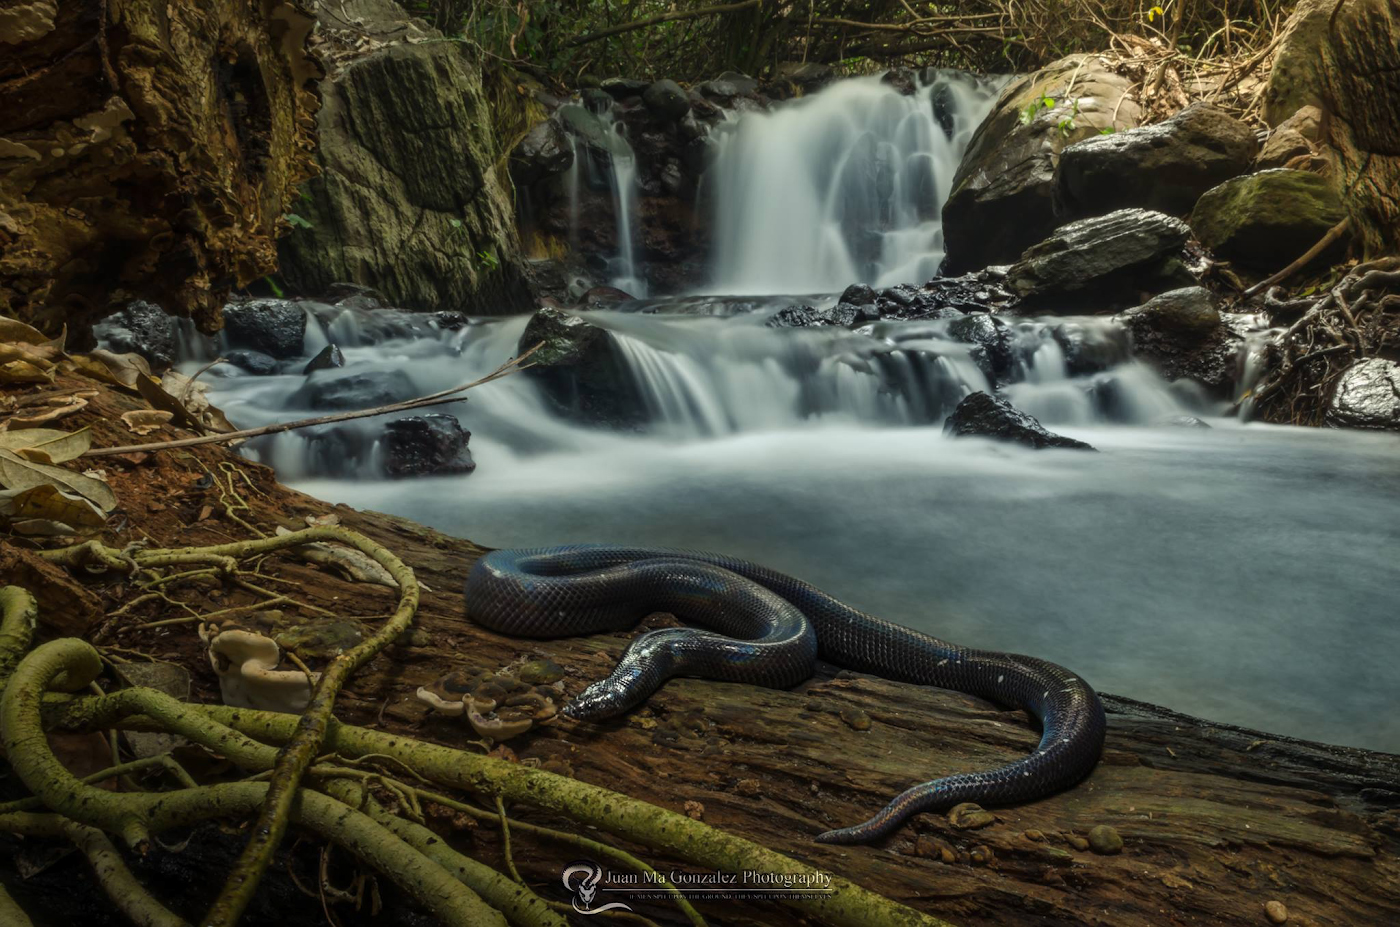 Фото 26. Двухцветная змея (лат. Loxocemus bicolor) . Тестирование ширика Laowa 15mm f4 1:1 Macro в полевых условиях. Снято на Nikon D5600 с внешней вспышкой.